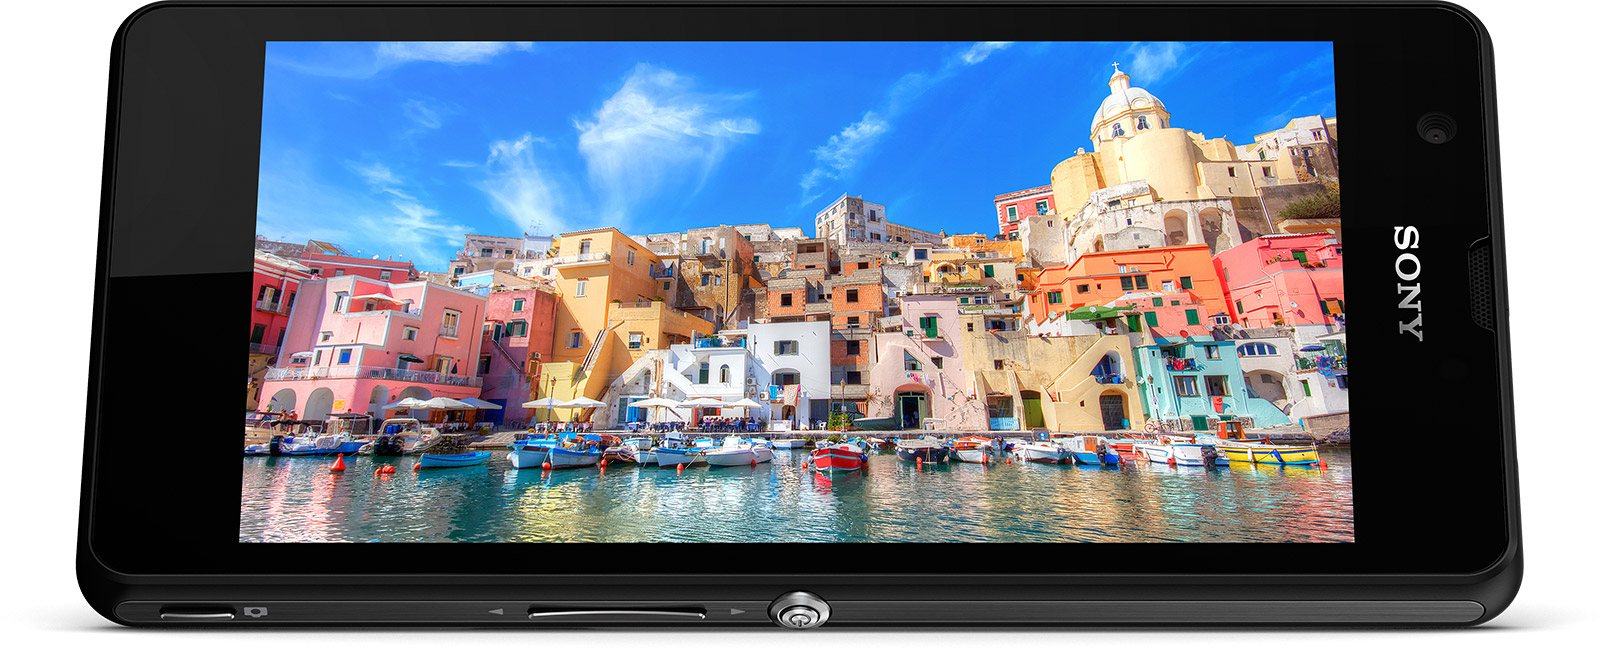 Xperia ZR has screen as impressive as HDTV.